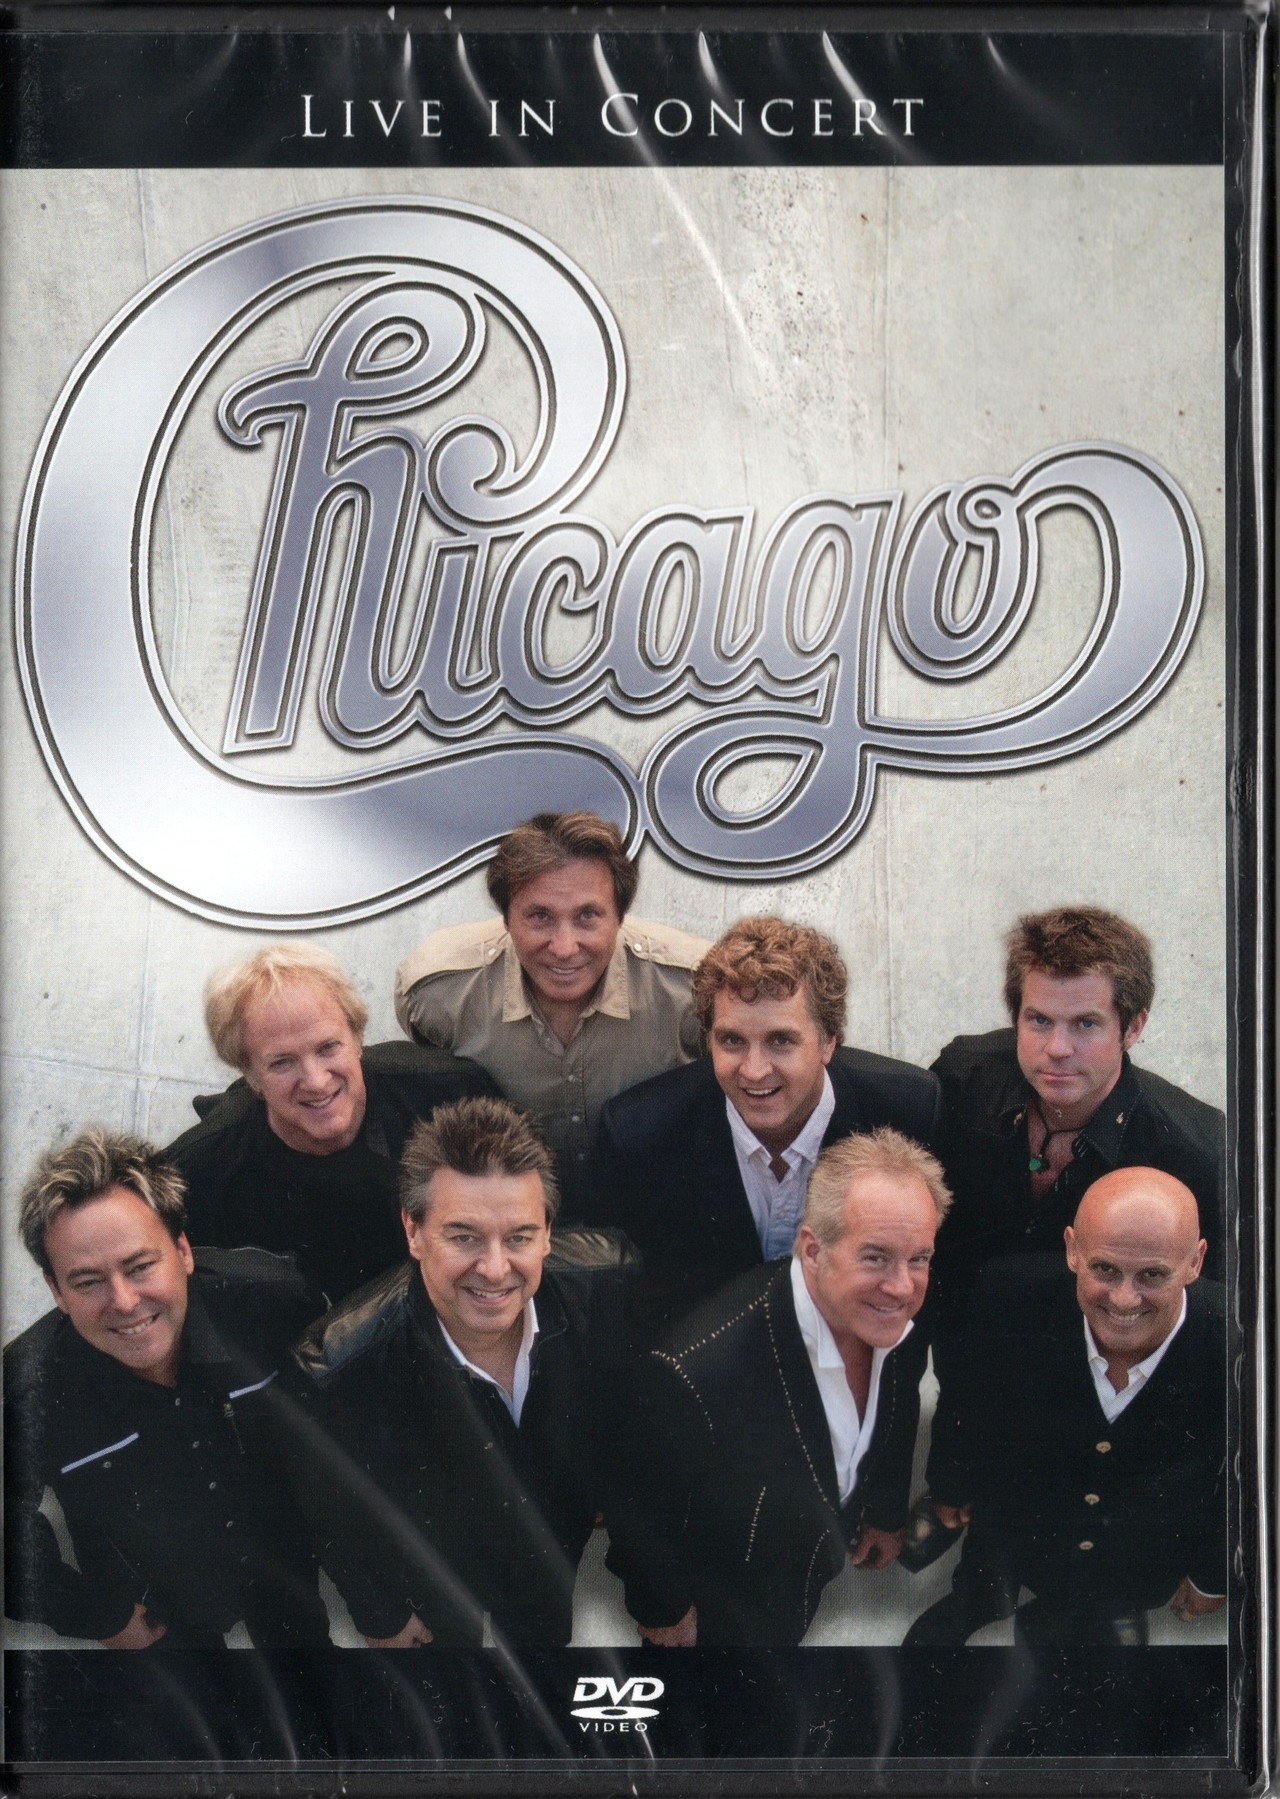 Chicago DVD Live In Concert Brand New Sealed 7899340771526 | eBay